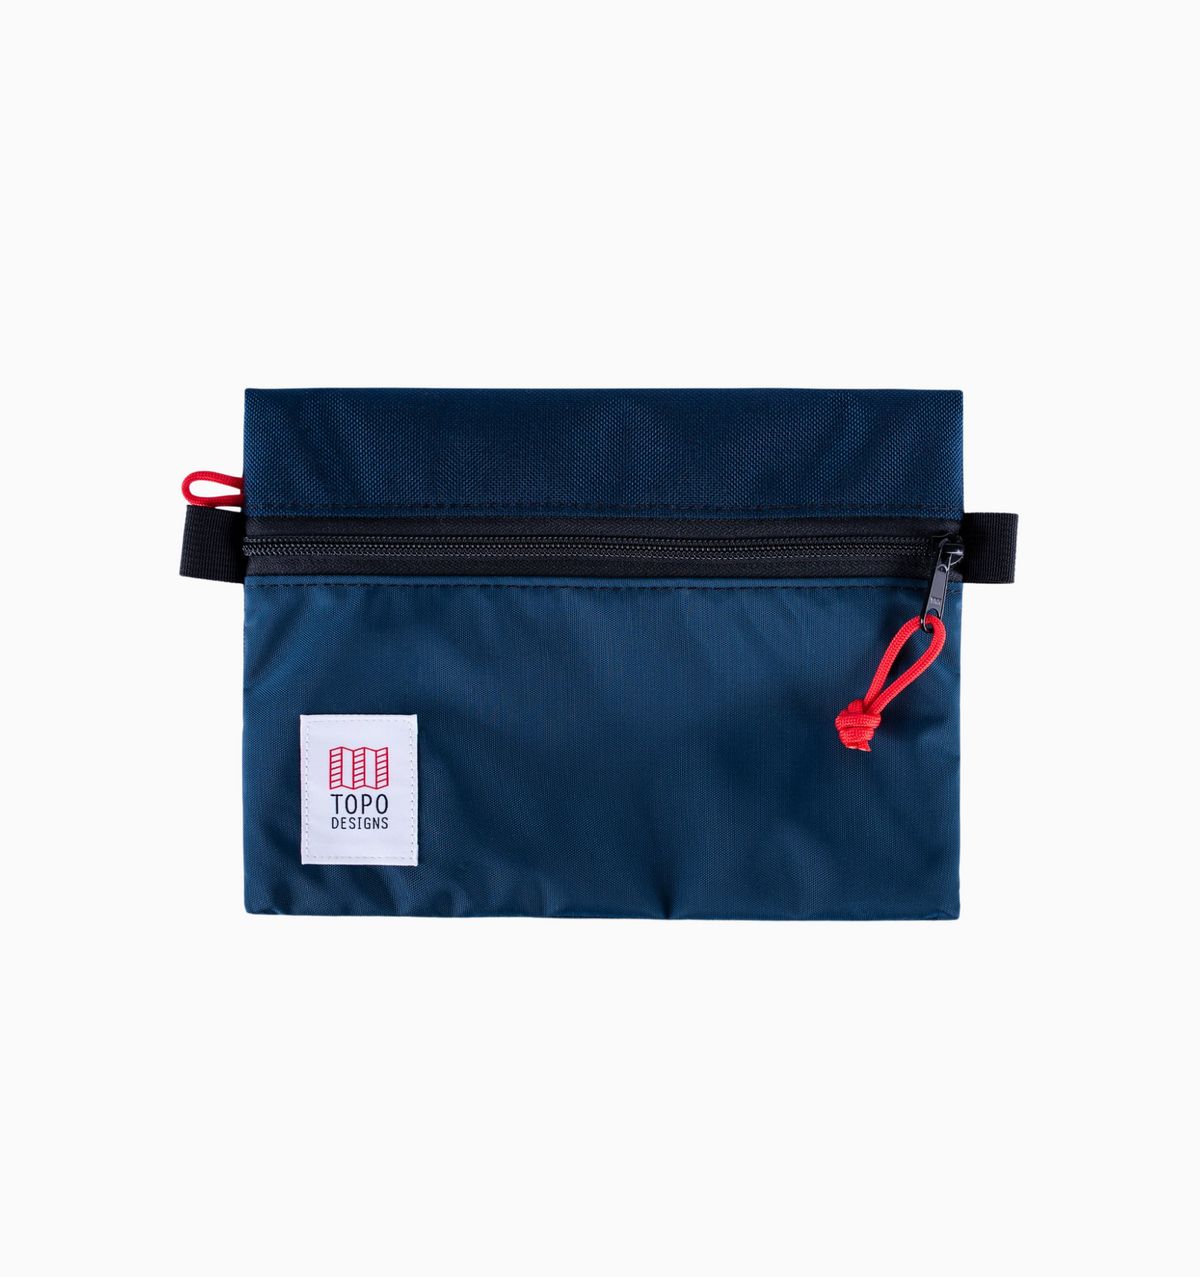 Topo Designs Medium Accessory Bag - Navy